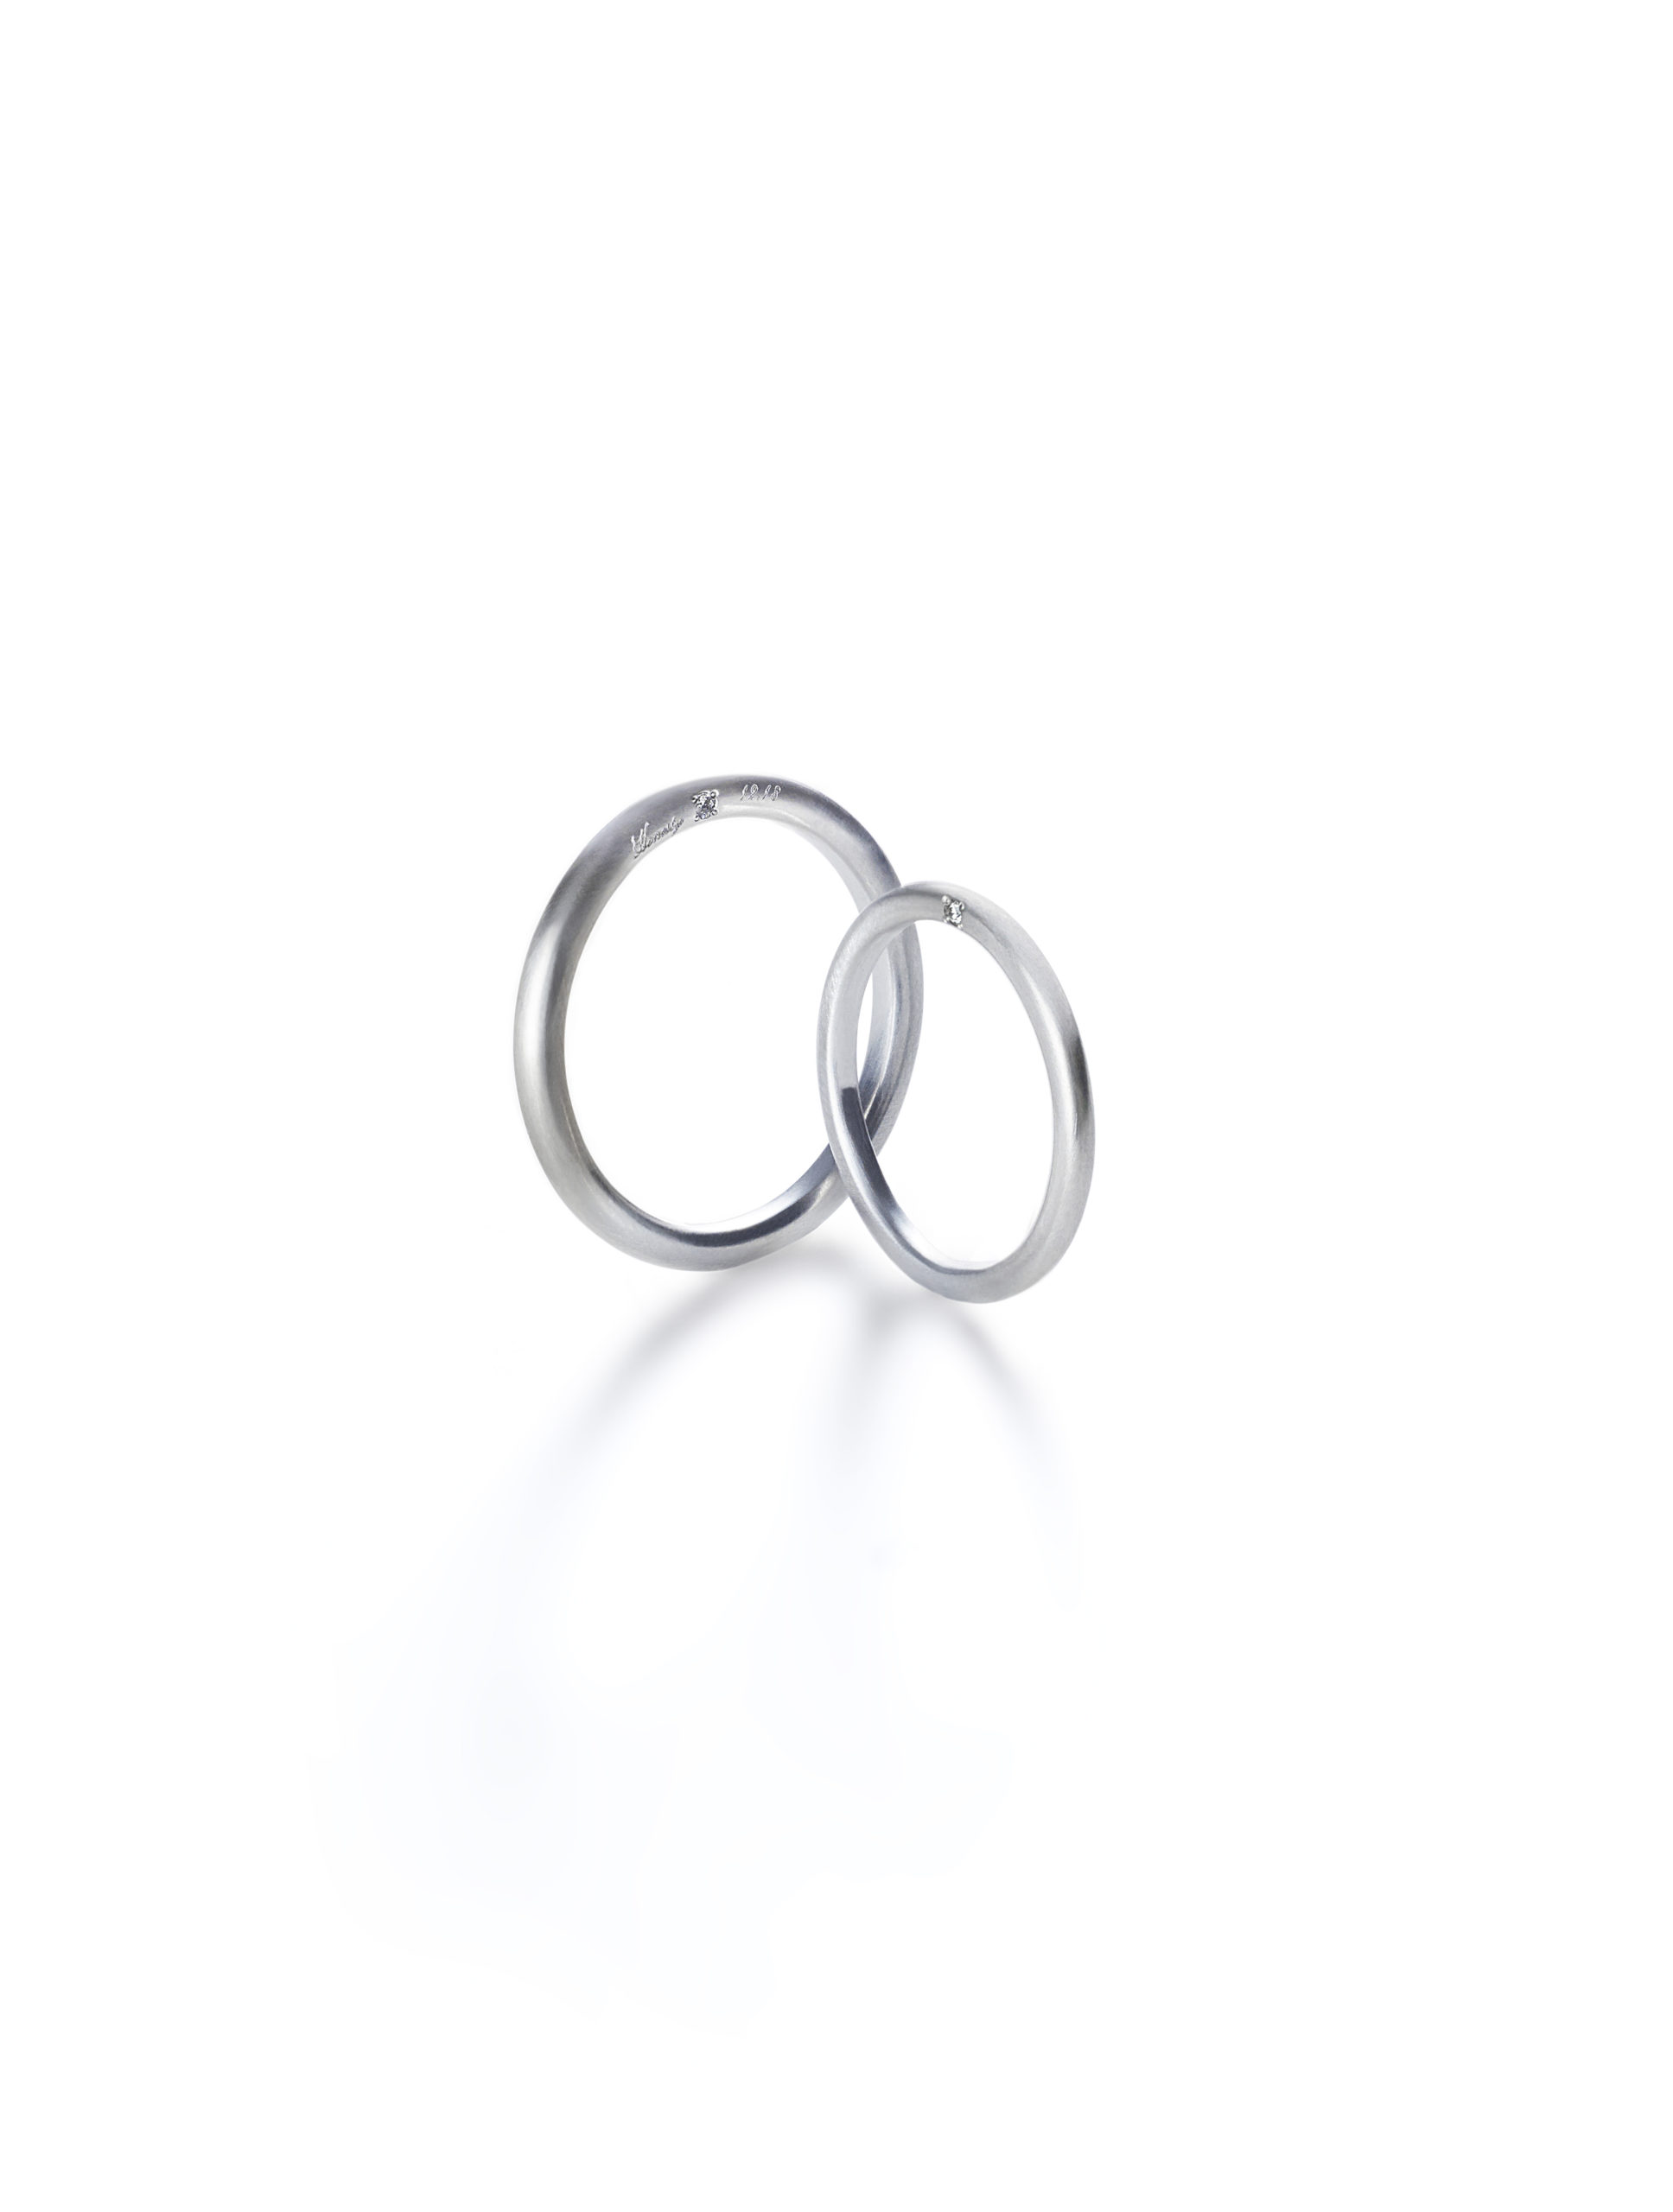 結婚指輪